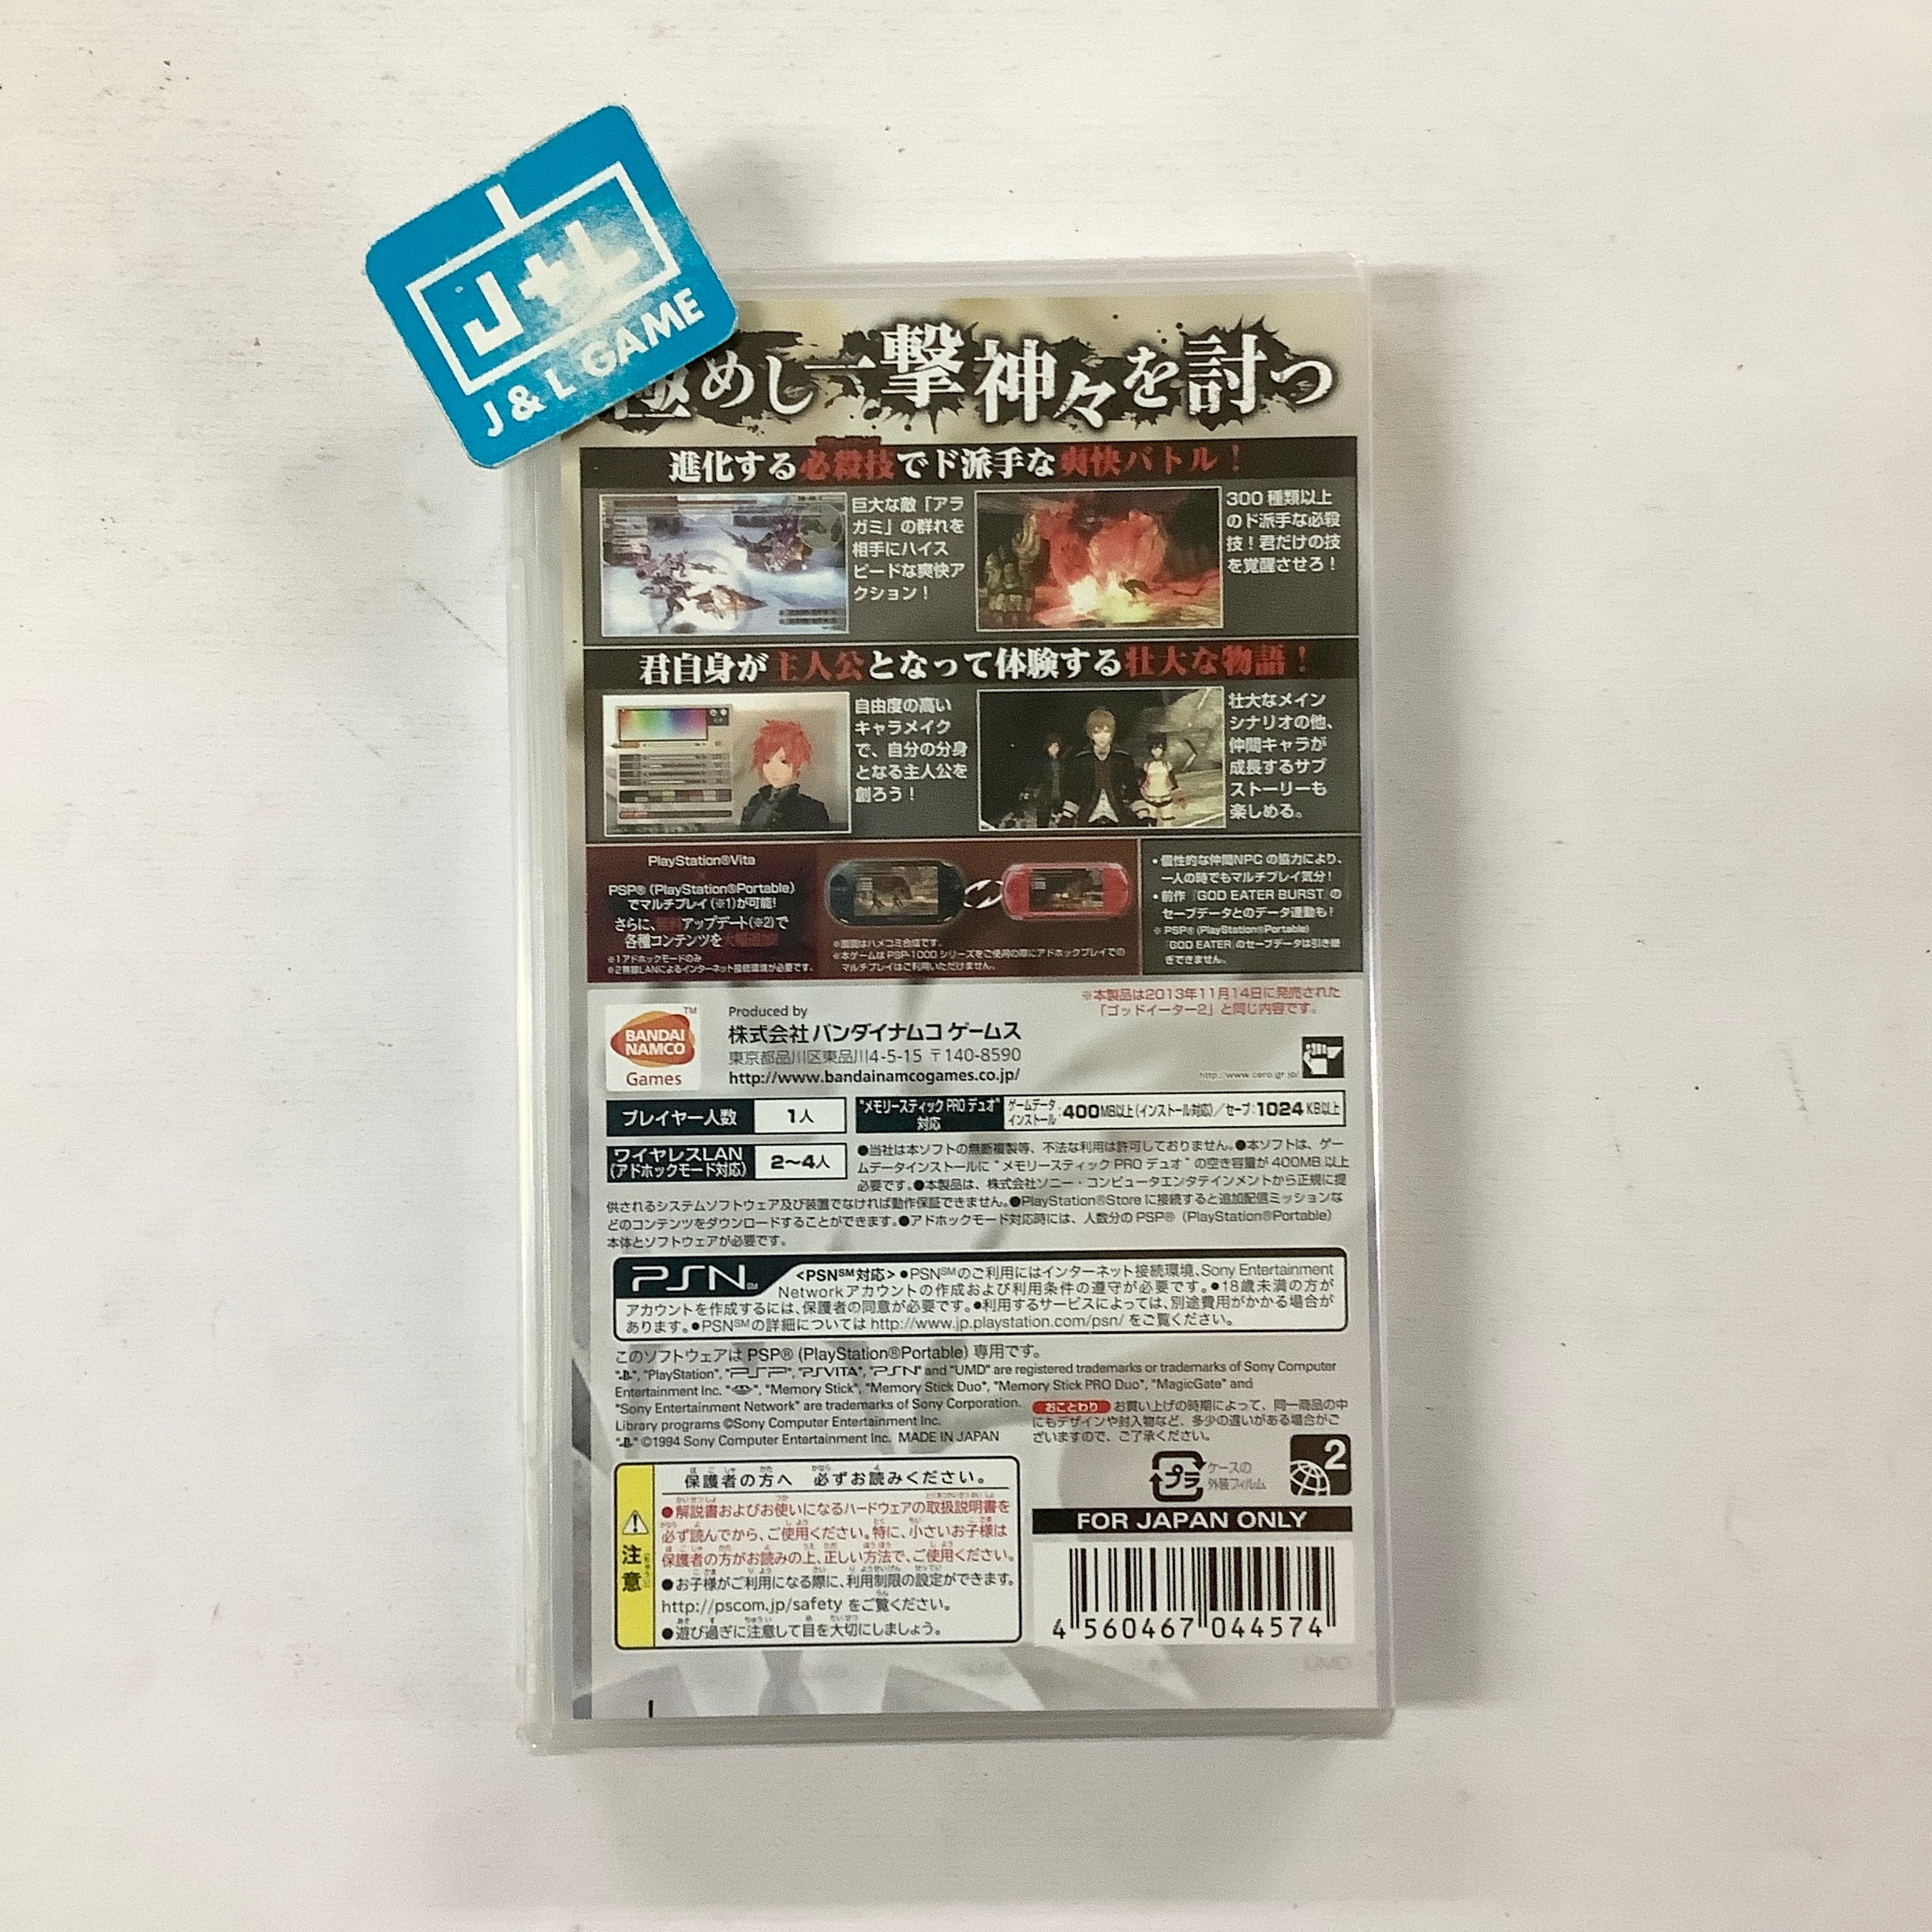 God Eater 2 (PSP the Best) - Sony PSP (Japanese Import) Video Games Bandai Namco Games   